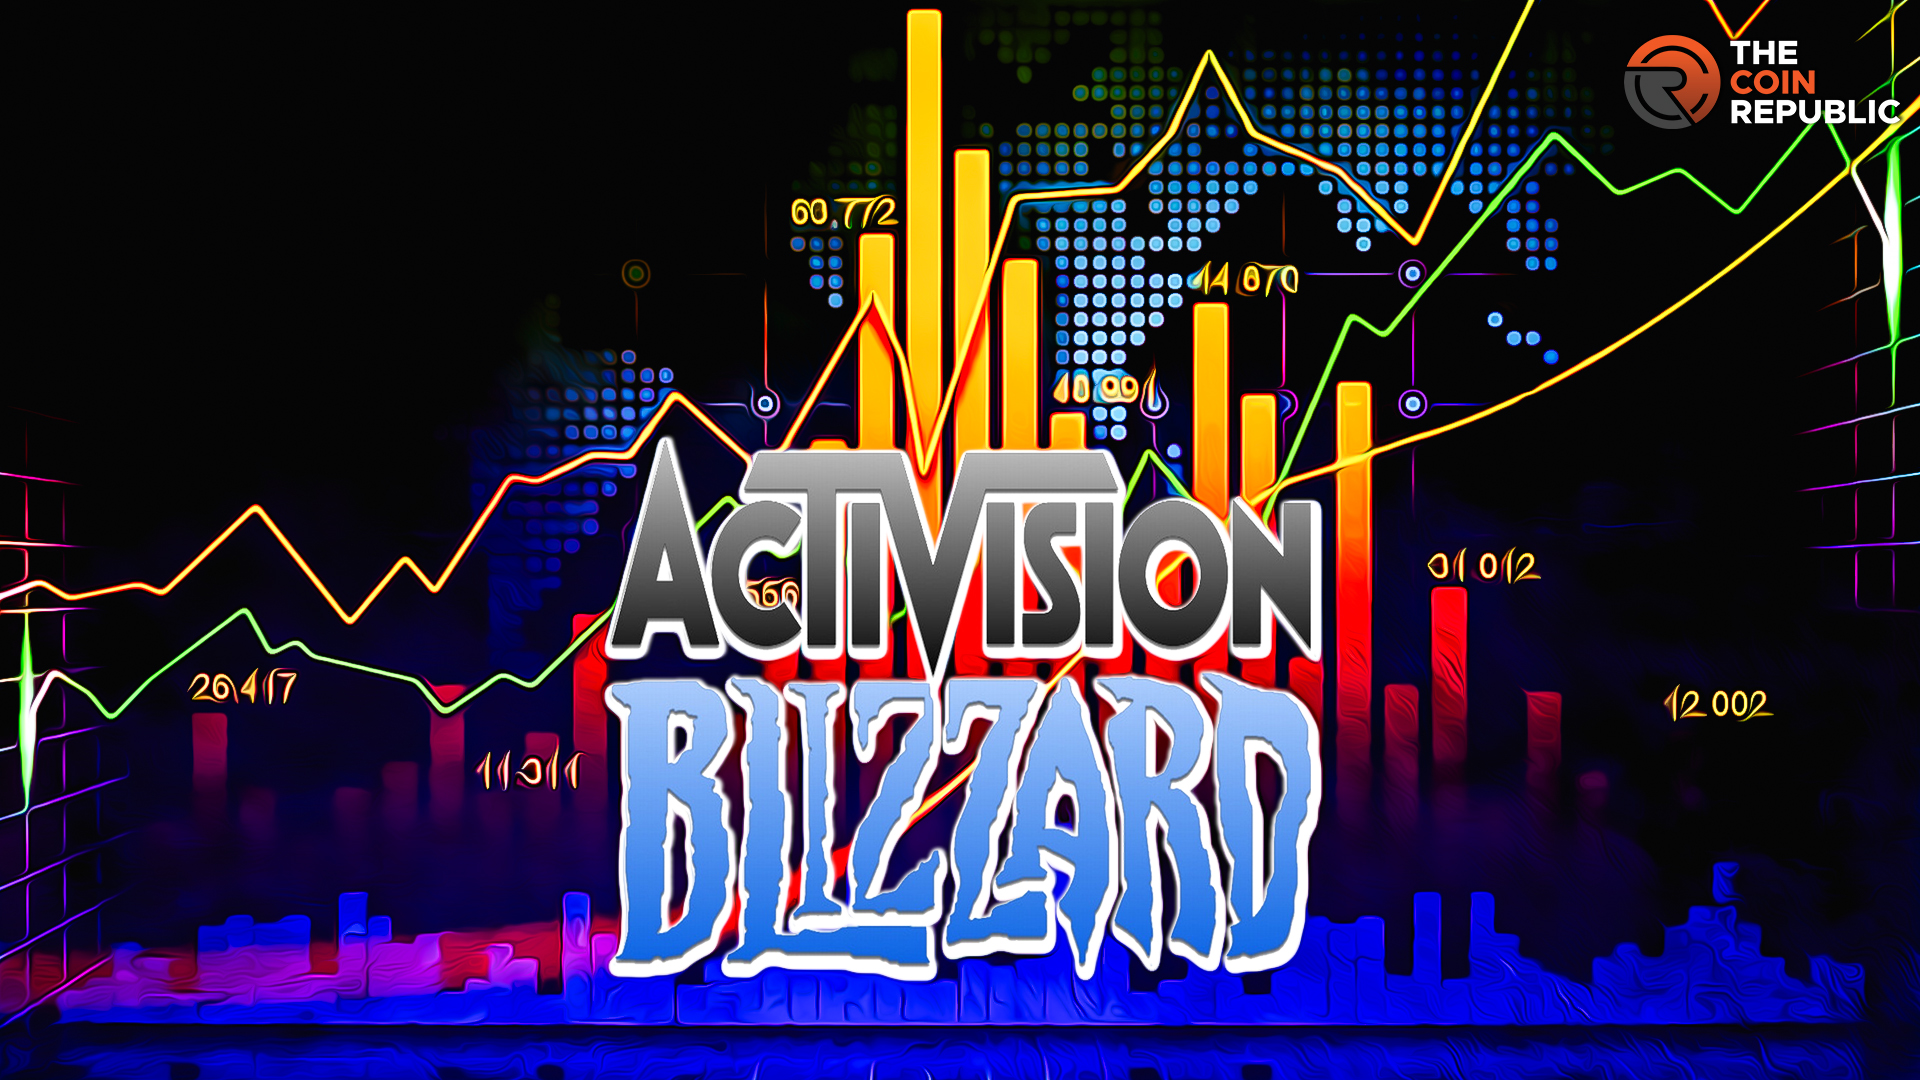 EU’s Approval Makes ATVI Price Bullish – Activision Blizzard